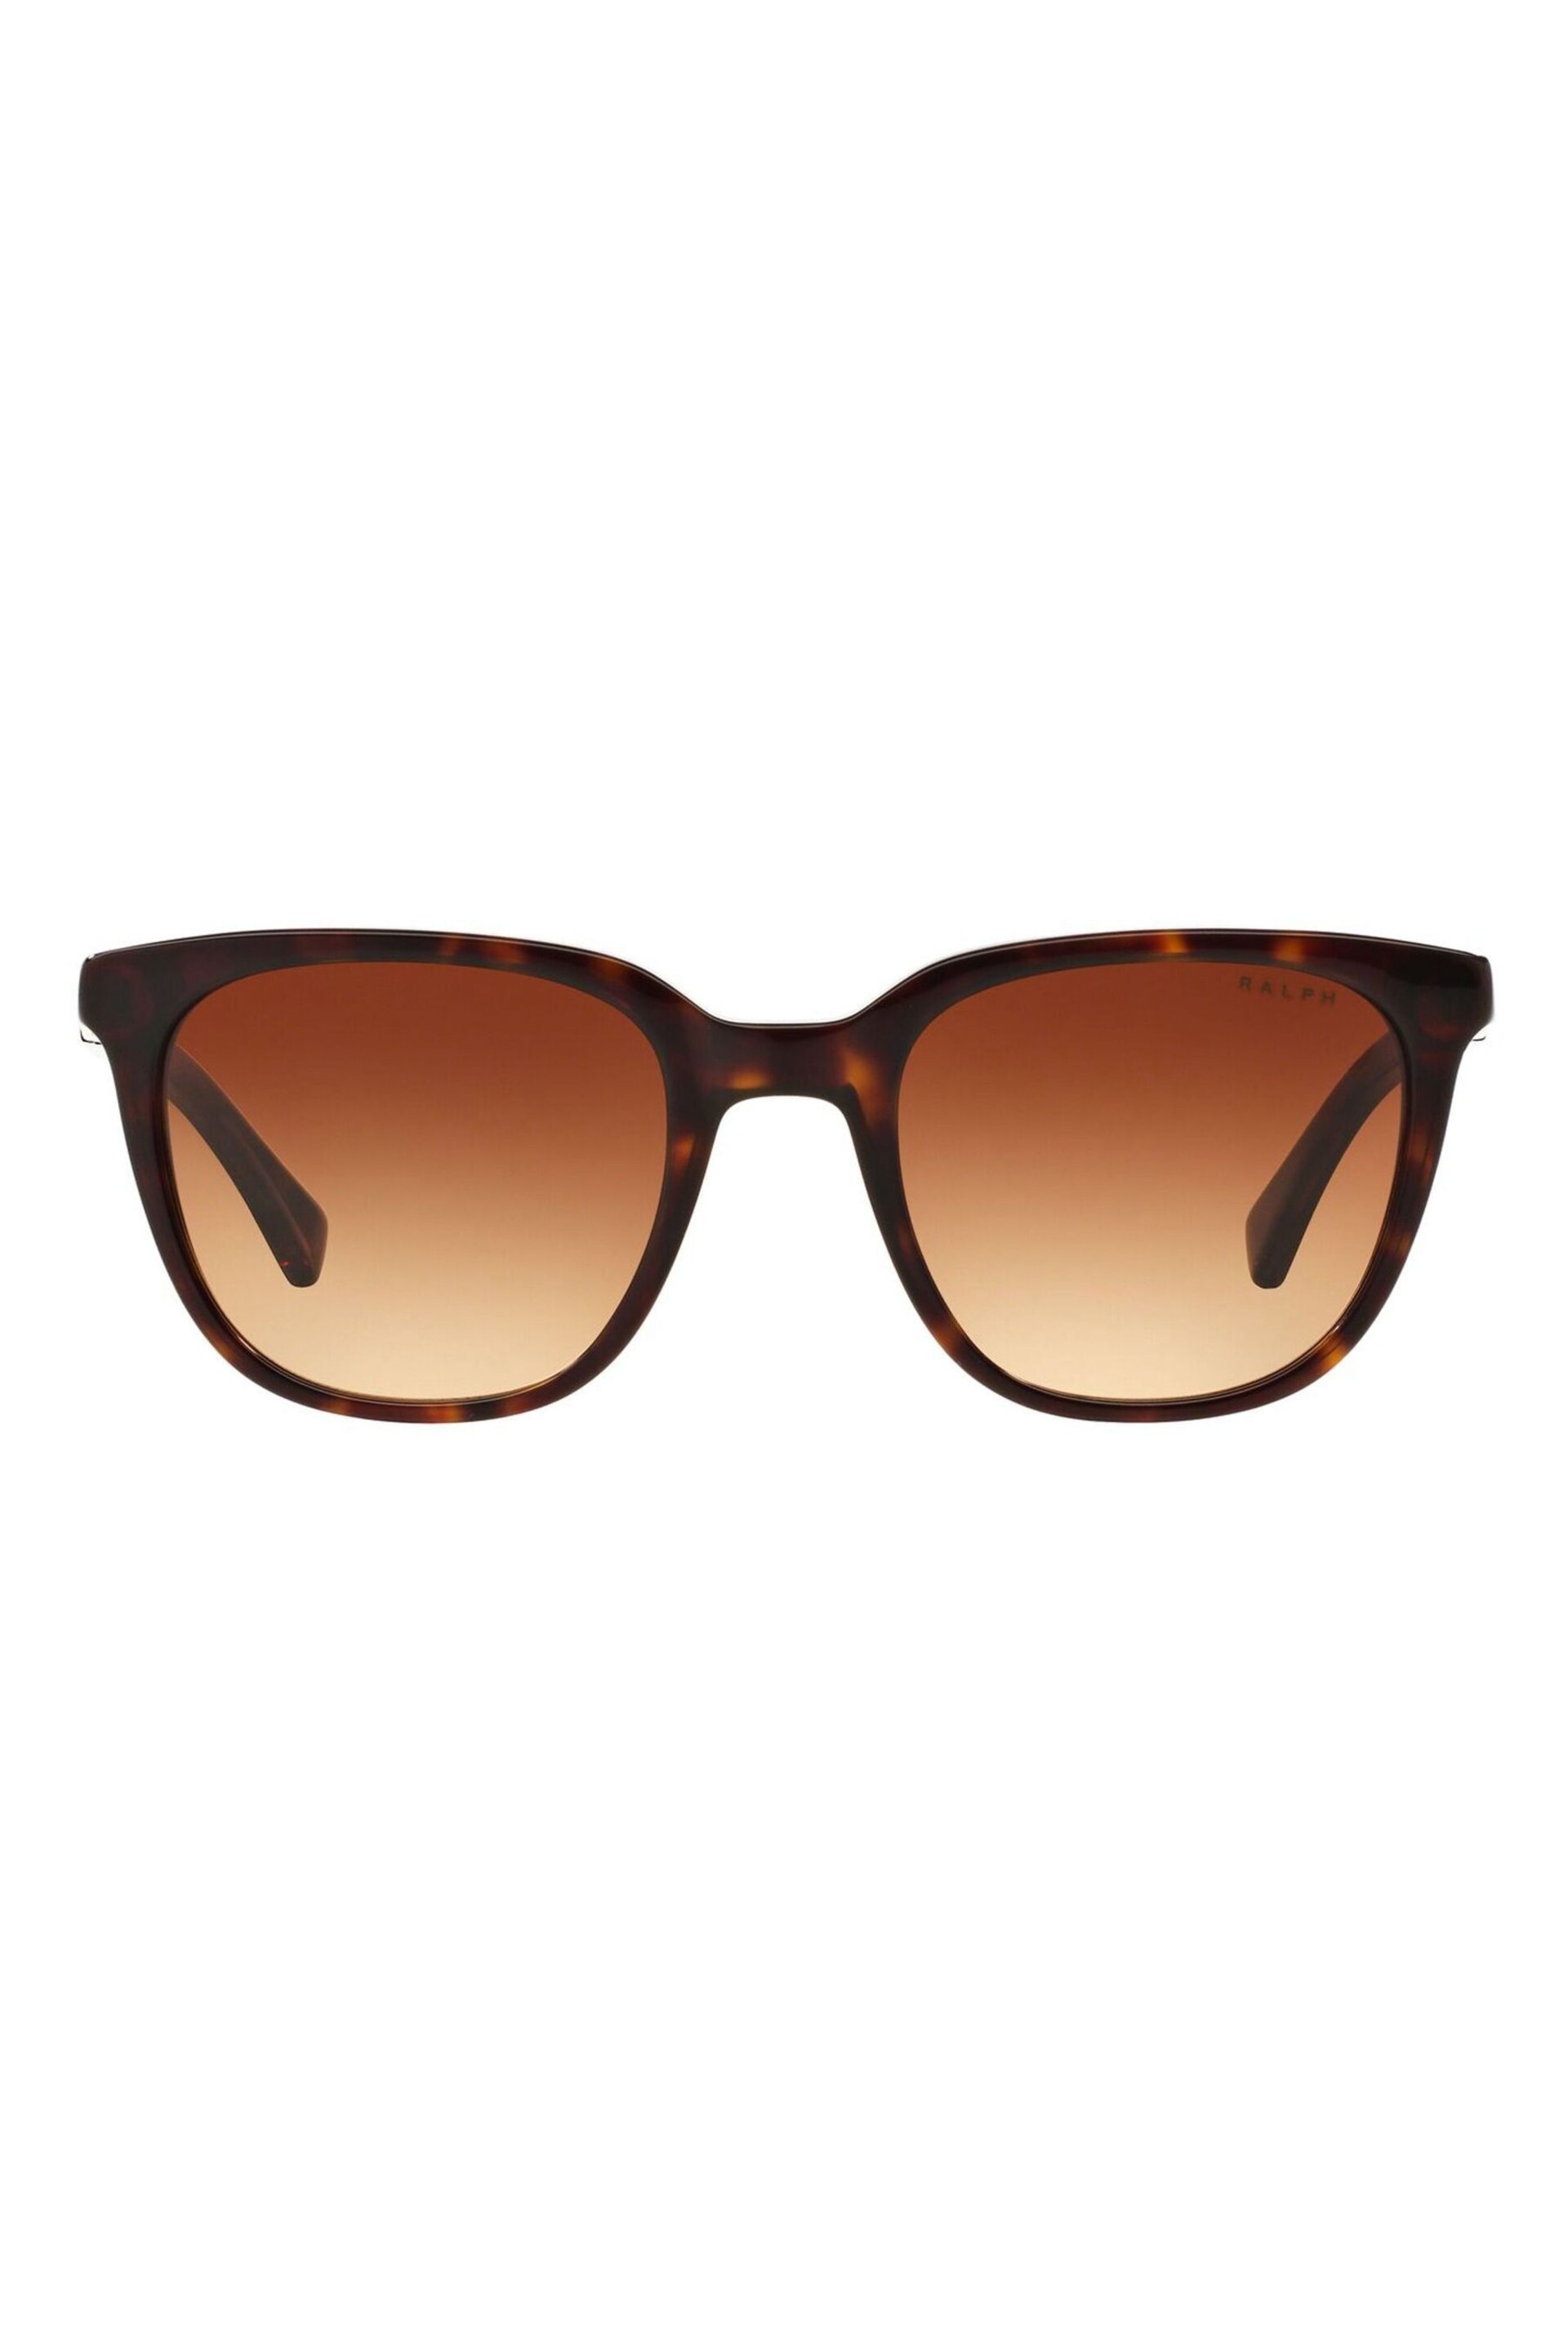 Ralph By Ralph Lauren Brown 0RA5206 Sunglasses - Image 1 of 12